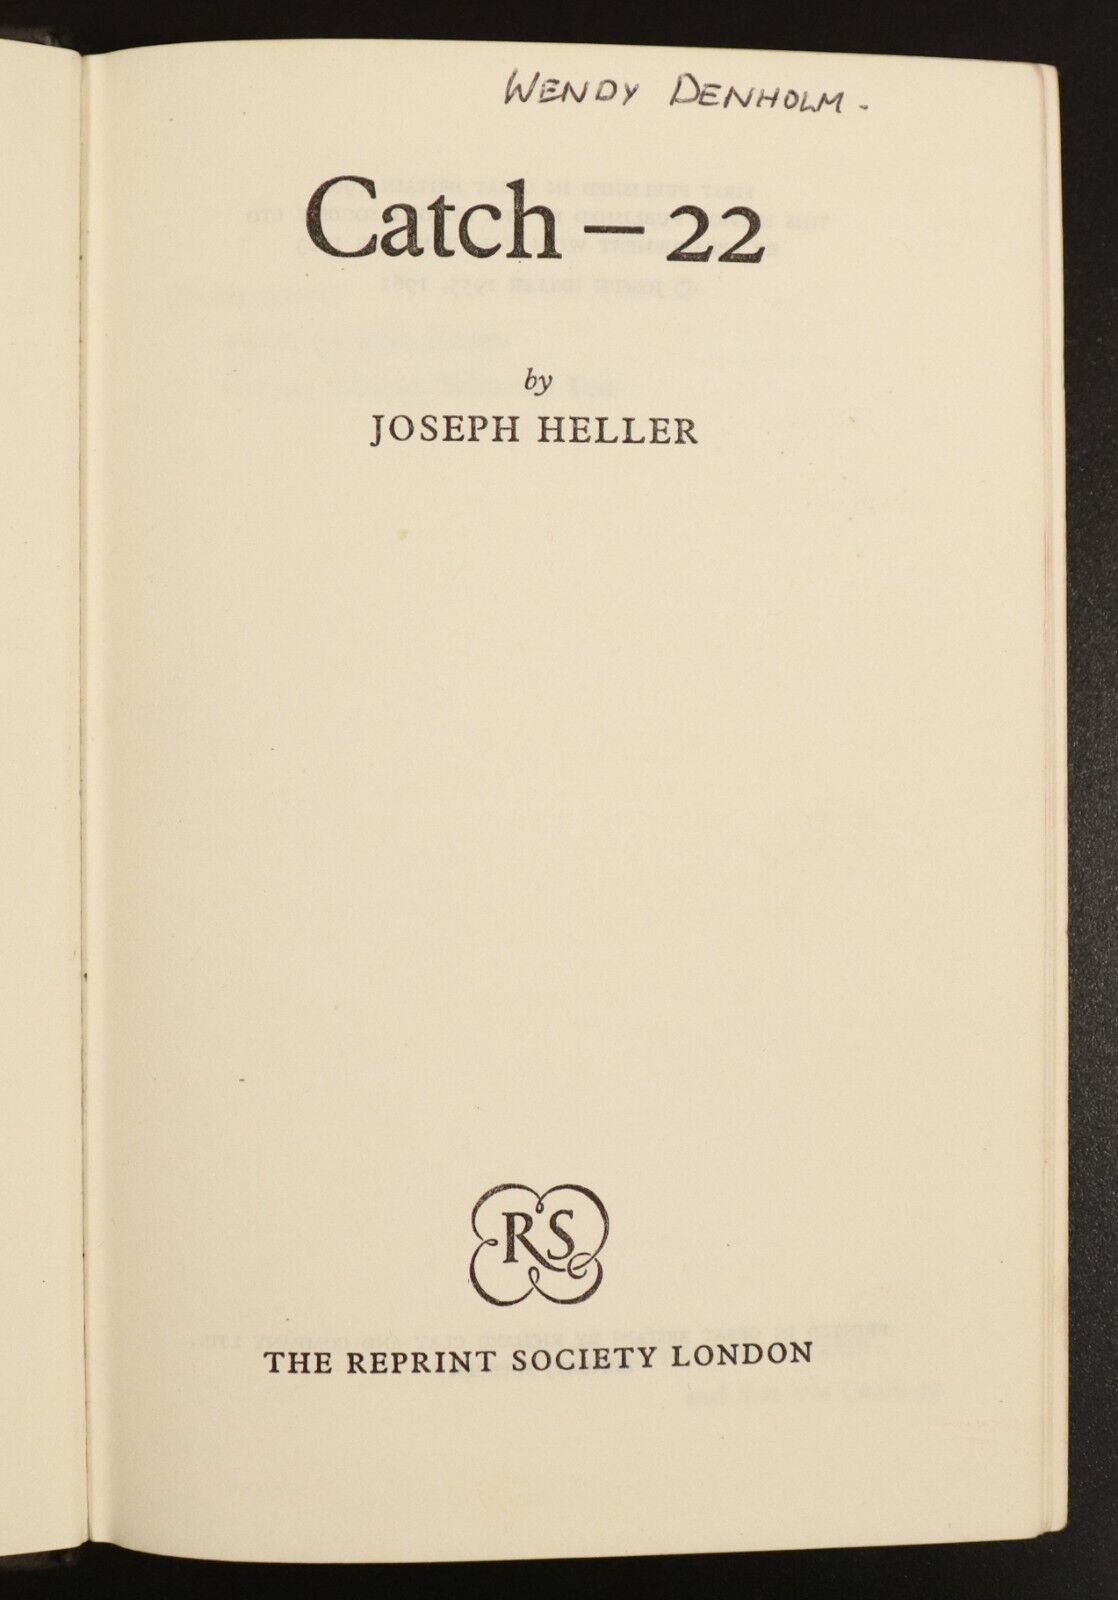 1963 Catch 22 by Joseph Heller American Fiction Book - 0